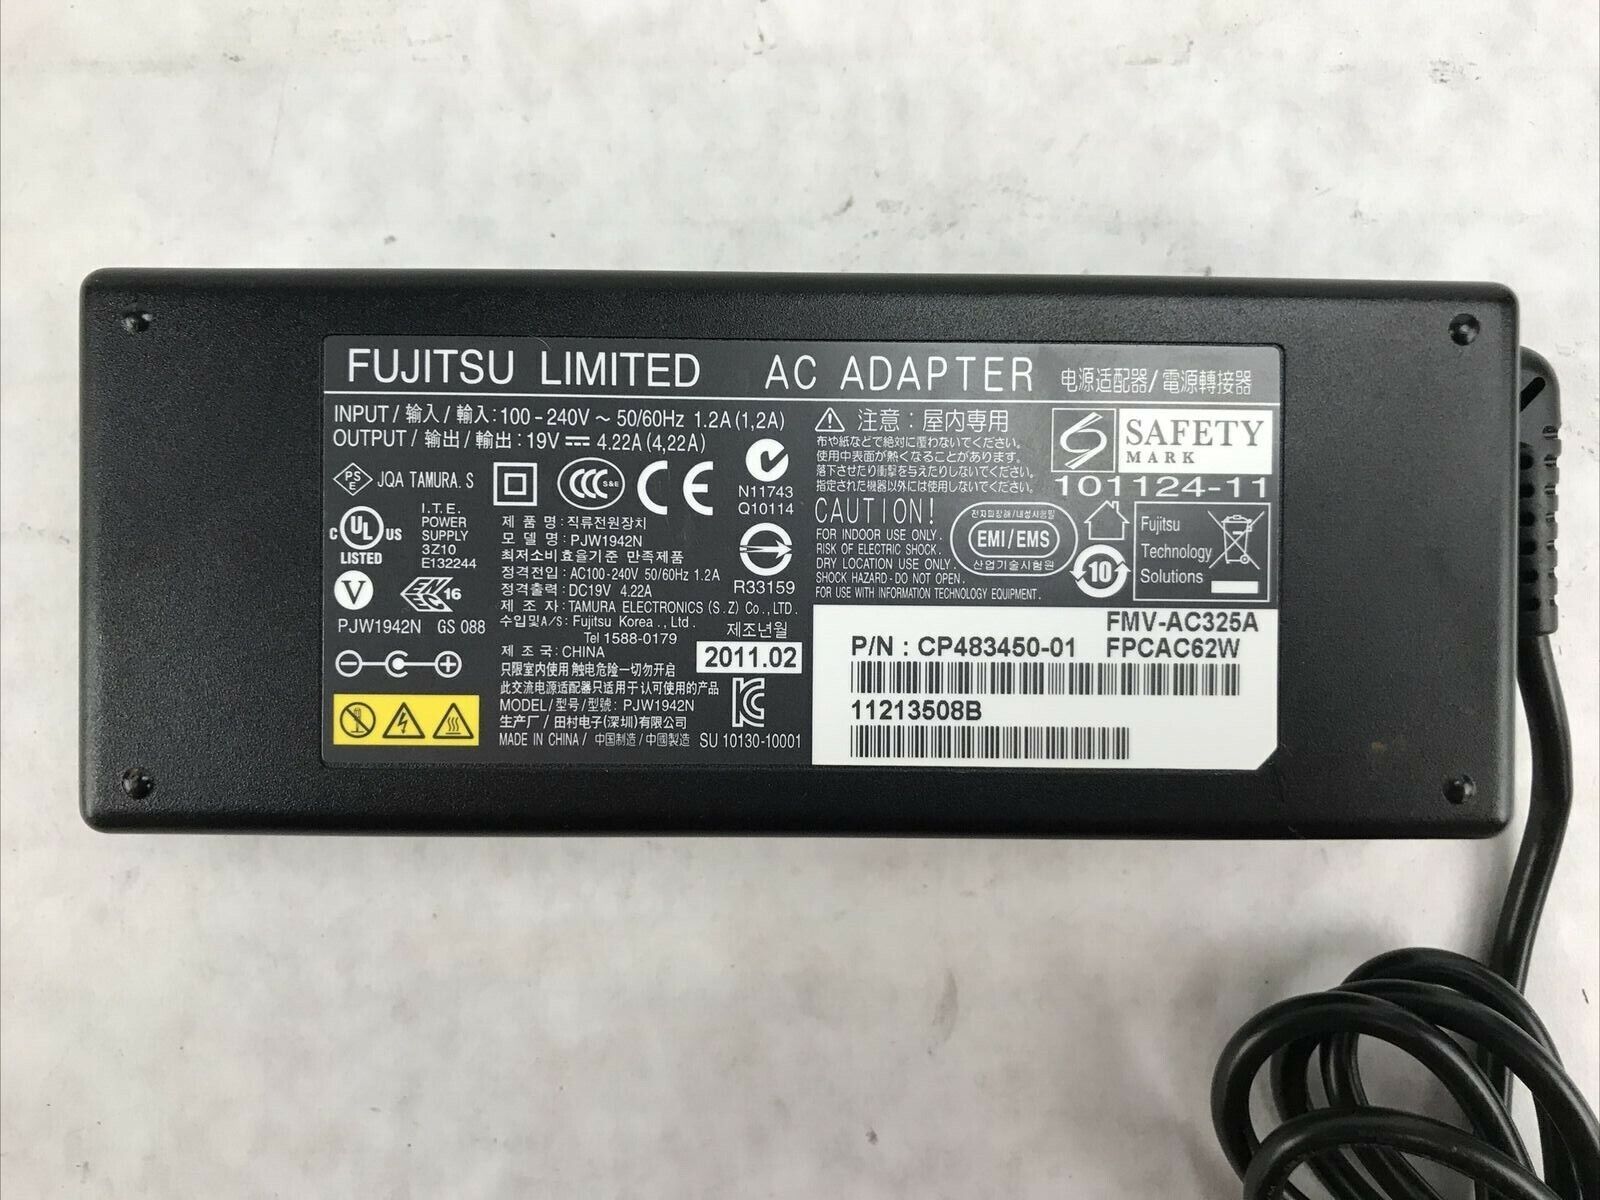 Fujitsu Limited AC Adapter PJW192N IN:100-240V 50/60Hz 1.2A OUT:19V 4.22A